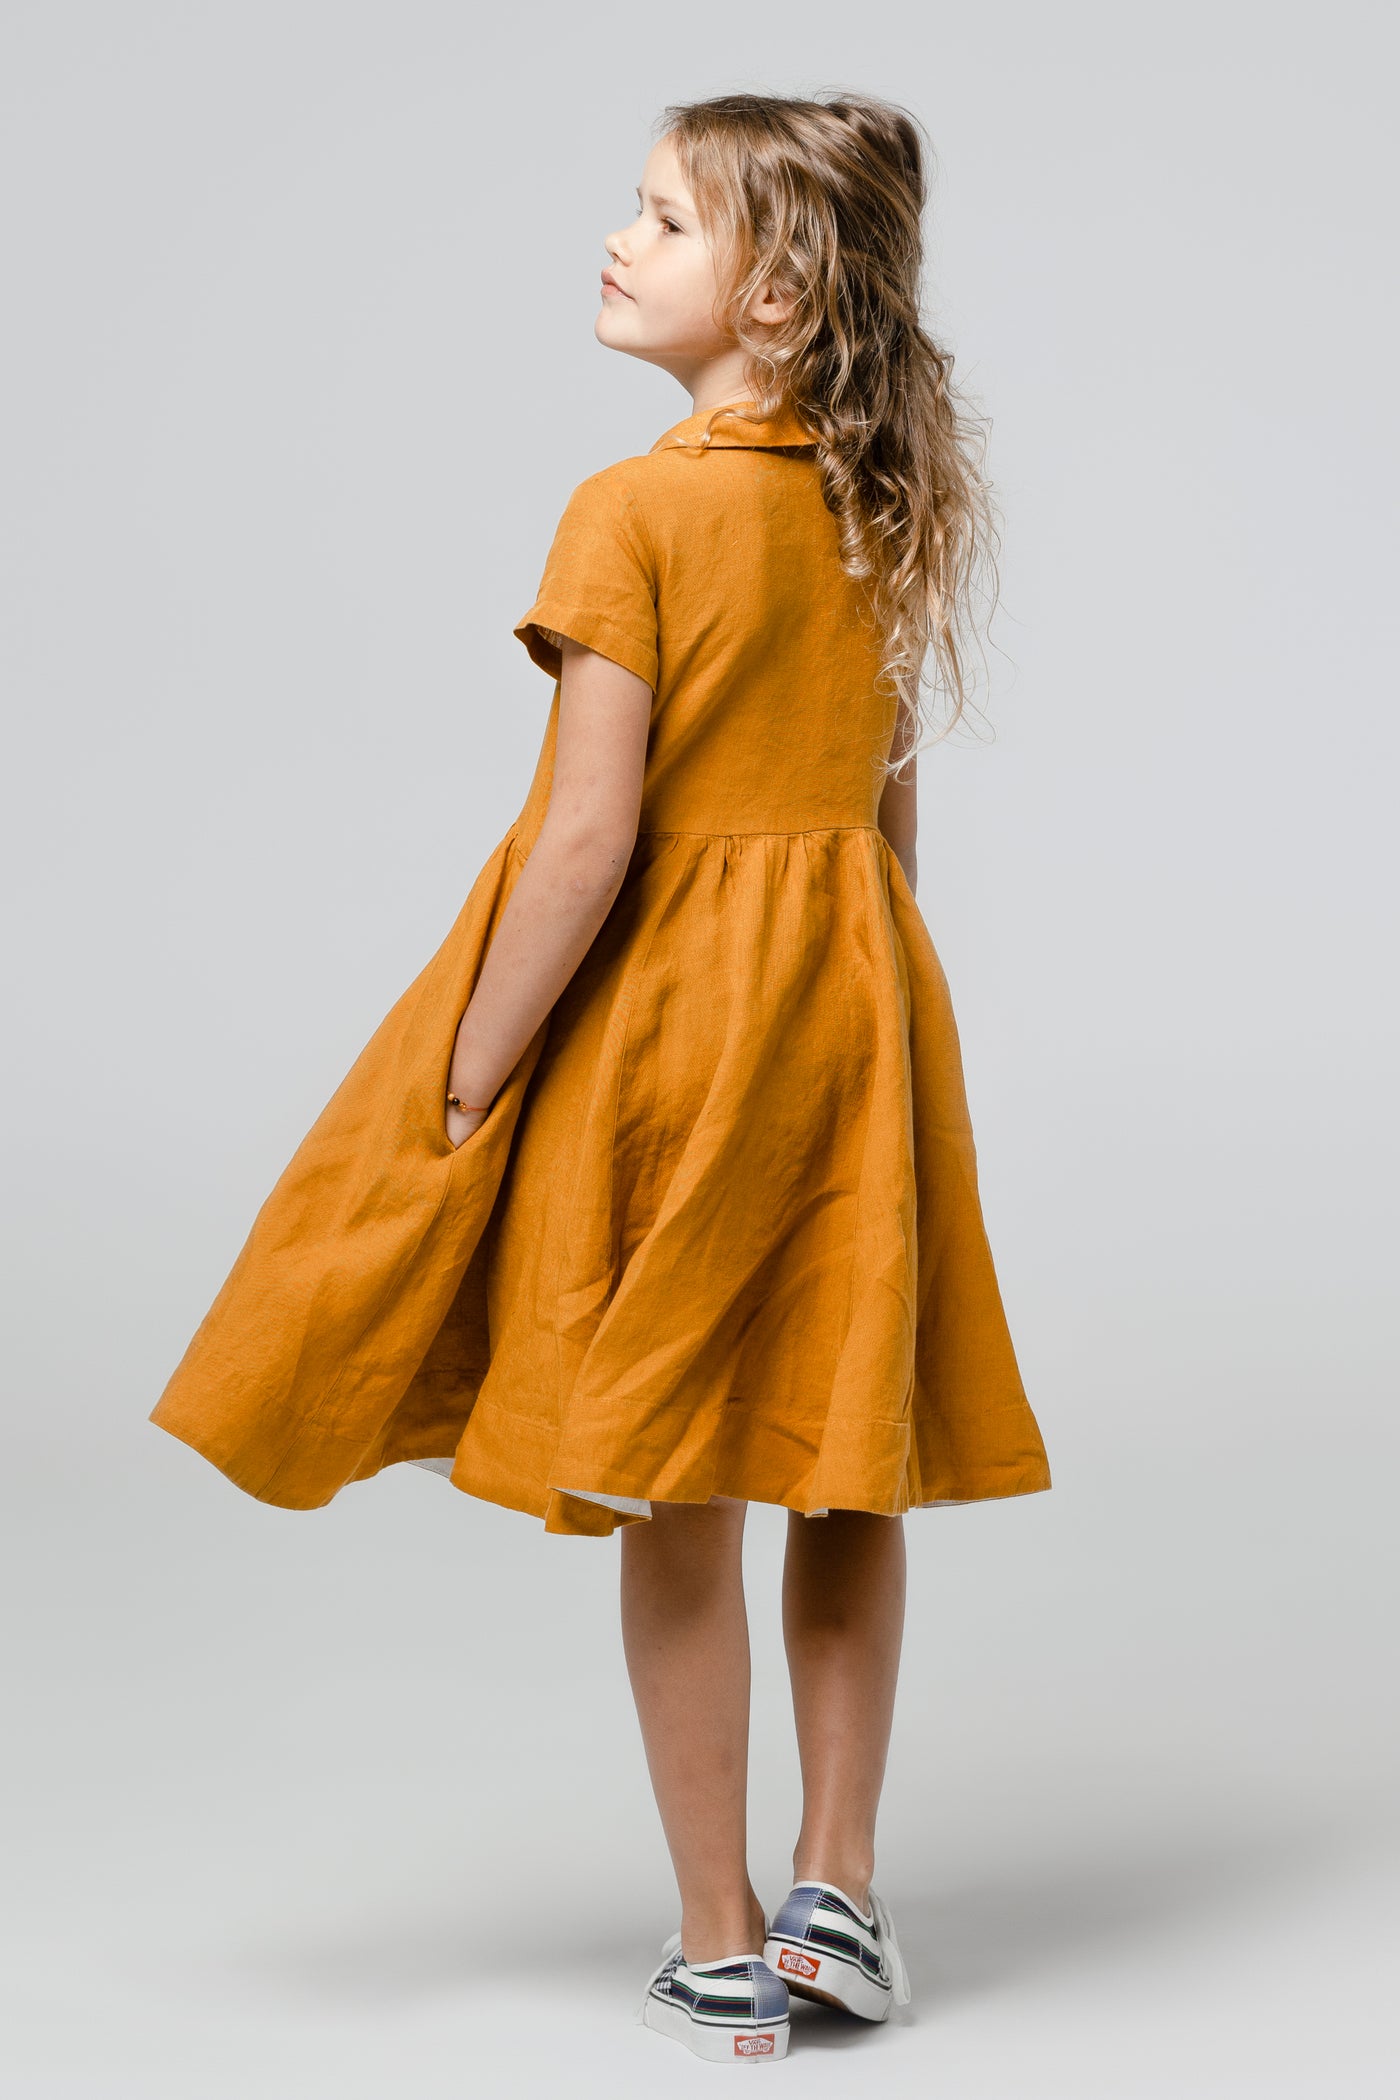 Mini Me Classic Dress, Short Sleeve, Marigold